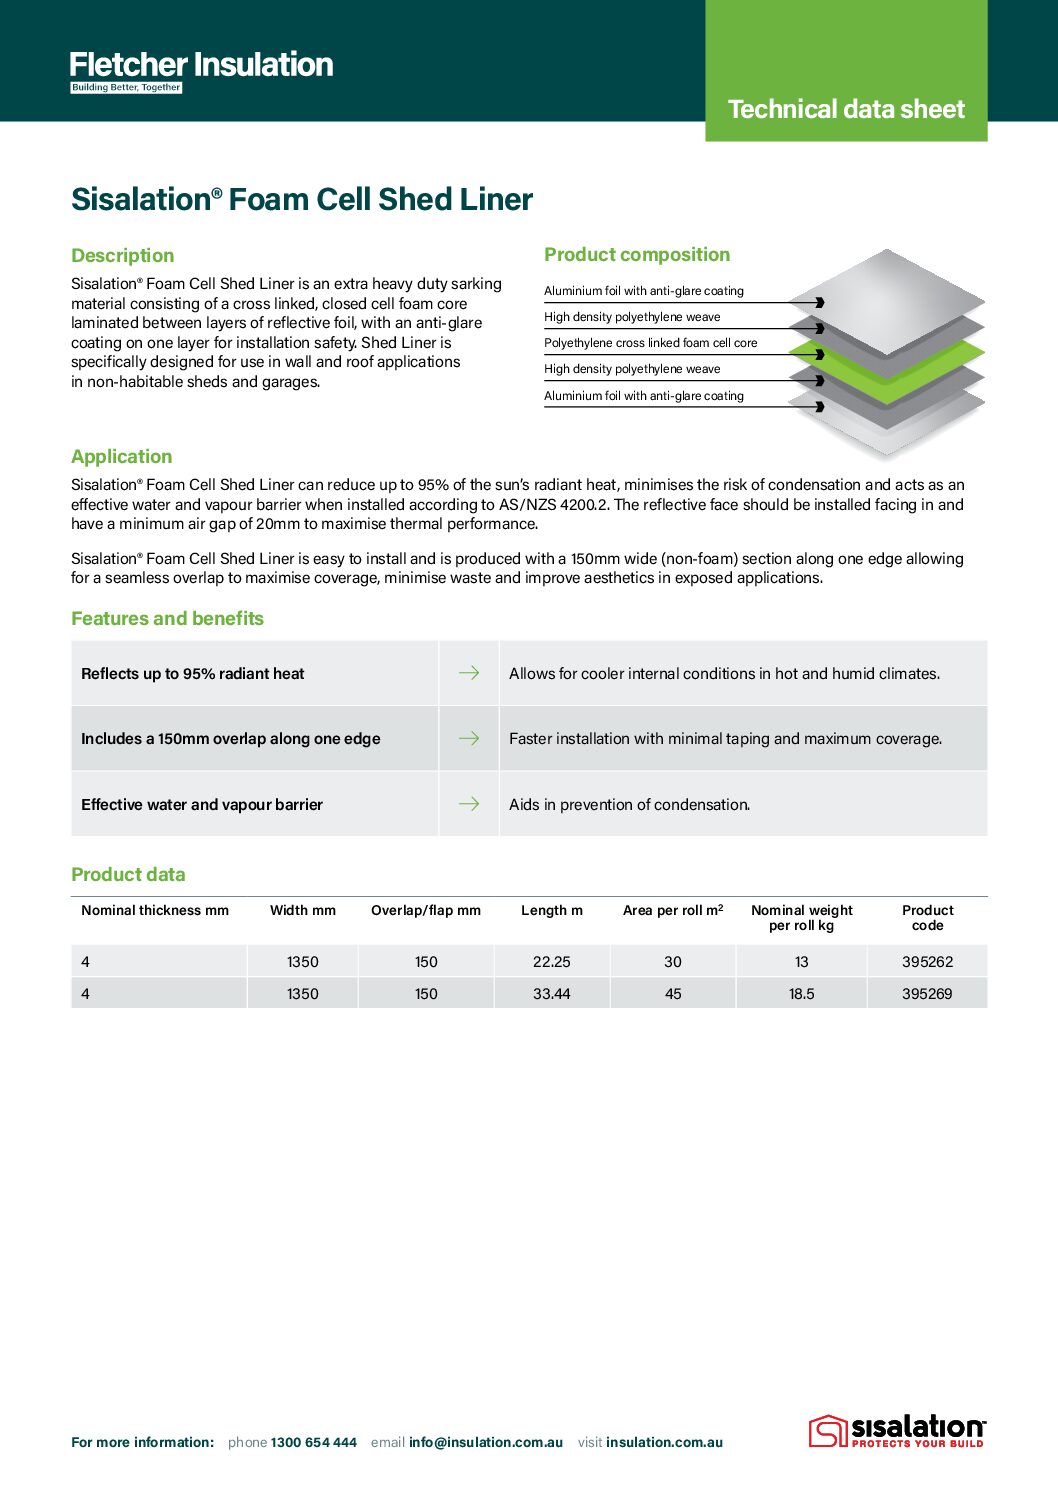 Sisalation® Foam Cell Shed Liner Technical Data Sheet